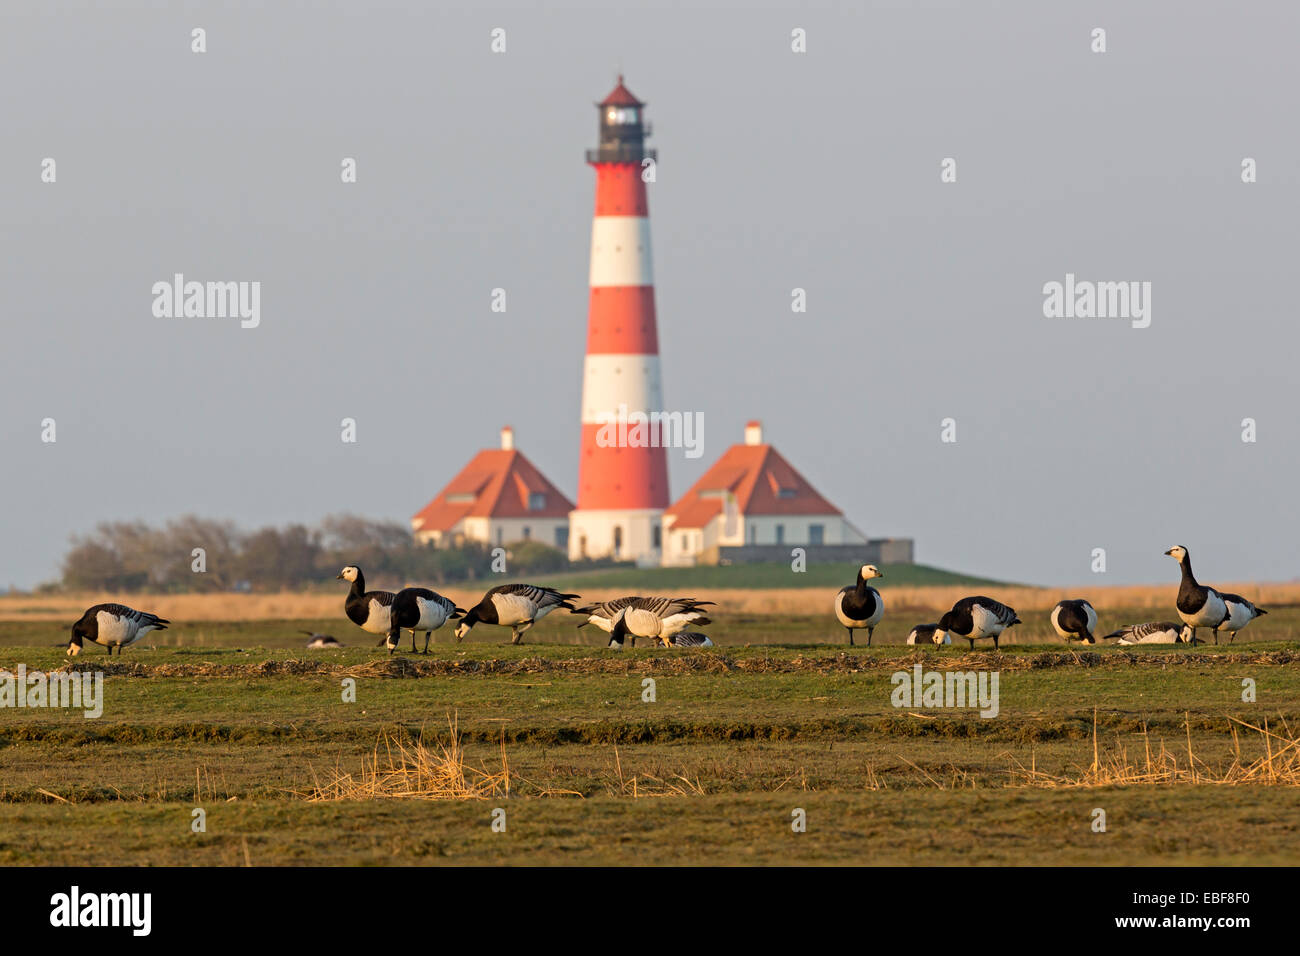 Lighthouse Westerheversand, Westerhever, Eiderstedt, North Frisia, Schleswig-Holstein, Germany, Europe Stock Photo